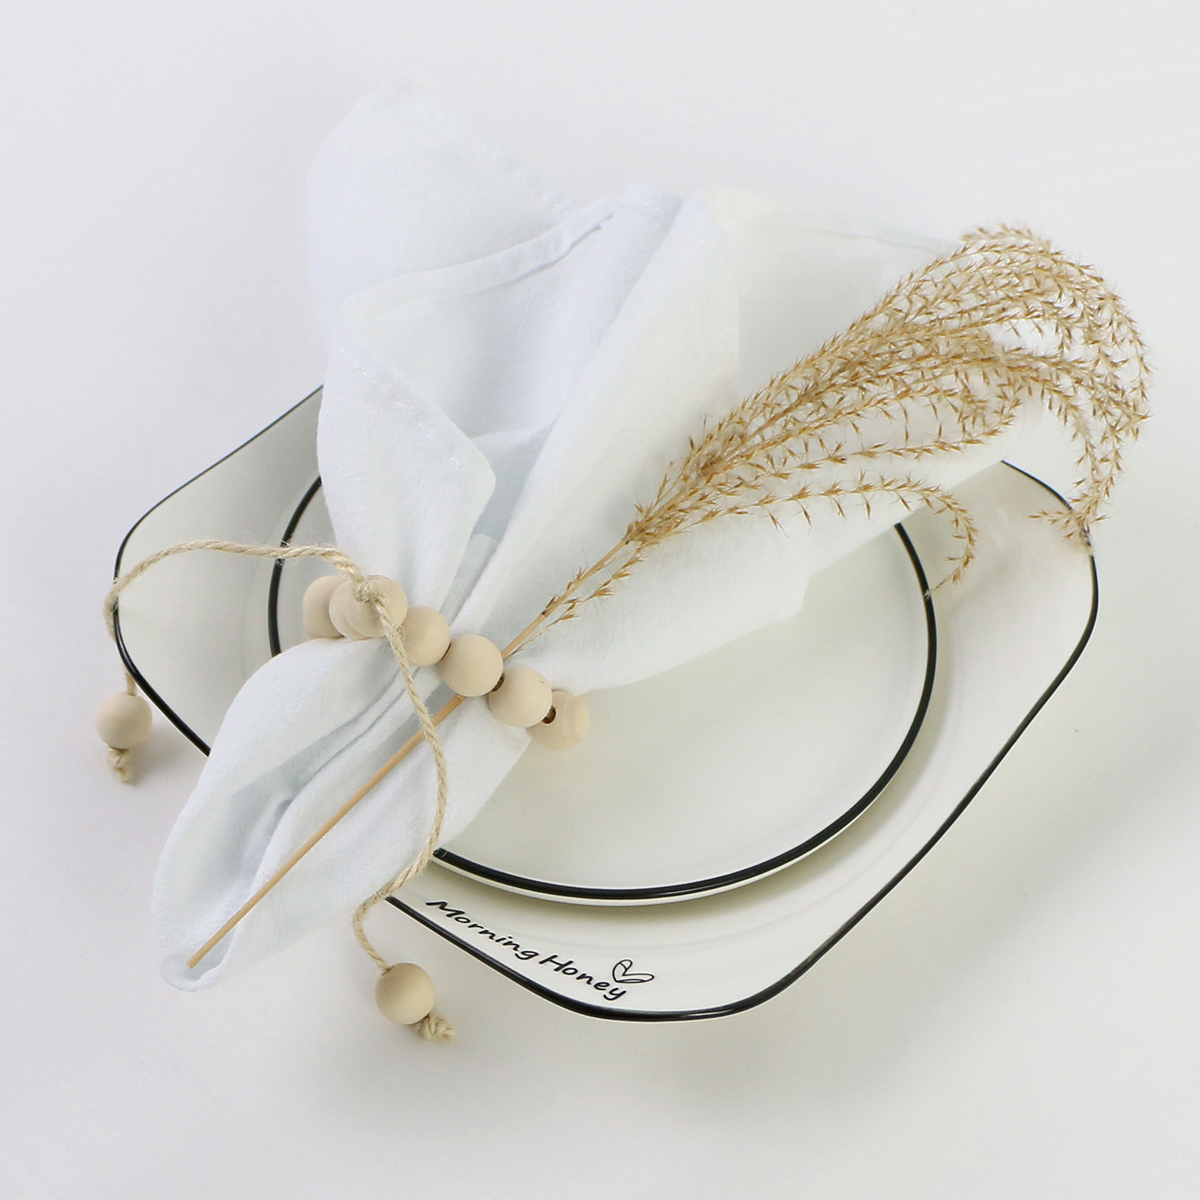 Table Napkin Serving Table Cloth Napkins Cotton Fabric Serviette Home Kitchen Tea Towels White Black for Wedding Easter Ramadan Decoration 220930